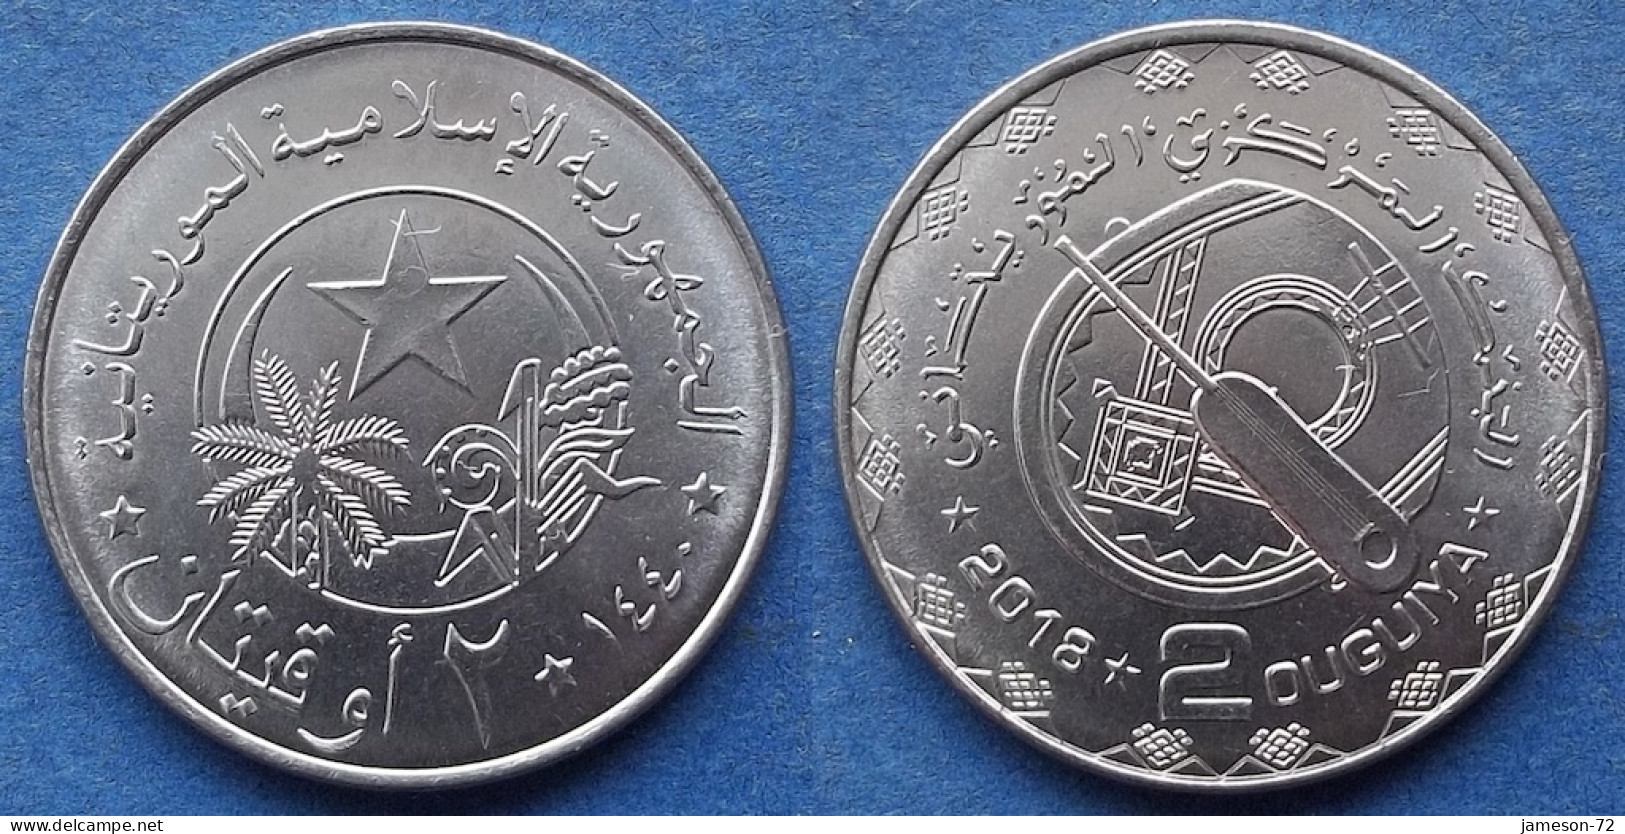 MAURITANIA - 2 Ouguiya AH1440 2018AD "National Instruments" KM# 16 Independent Republic (1960) - Edelweiss Coins - Mauritanië